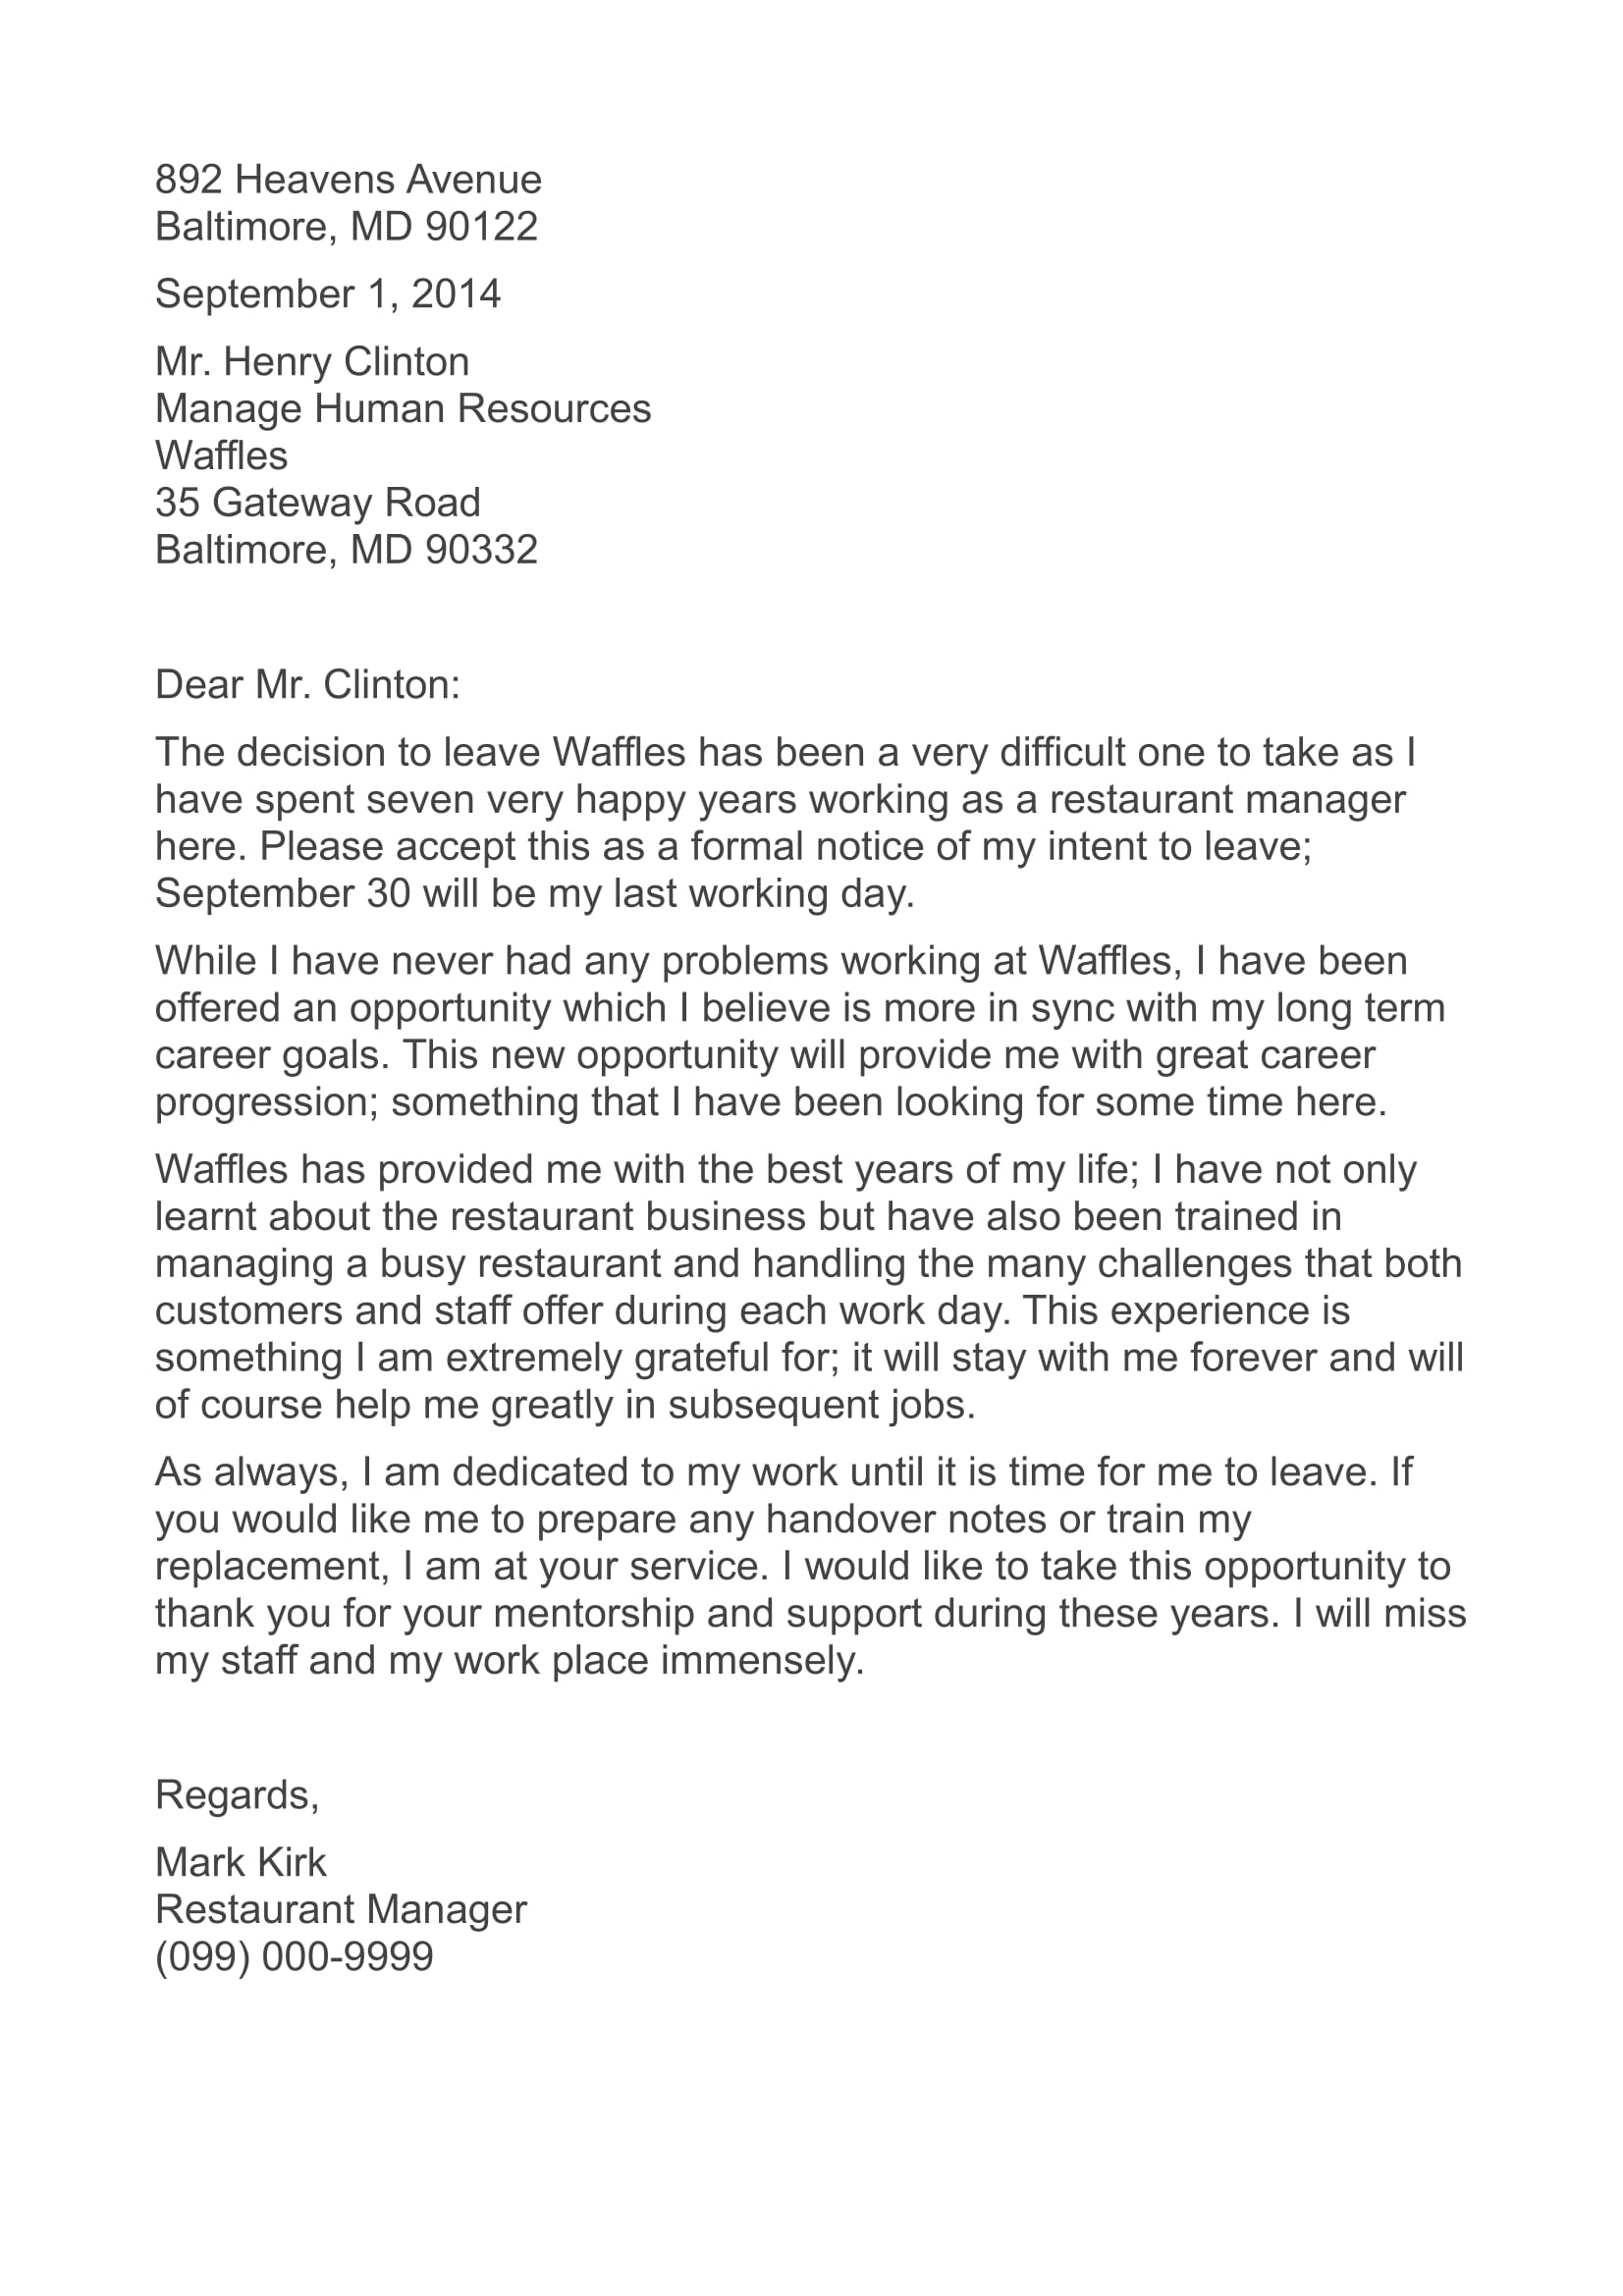 restaurant manager resignation letter example